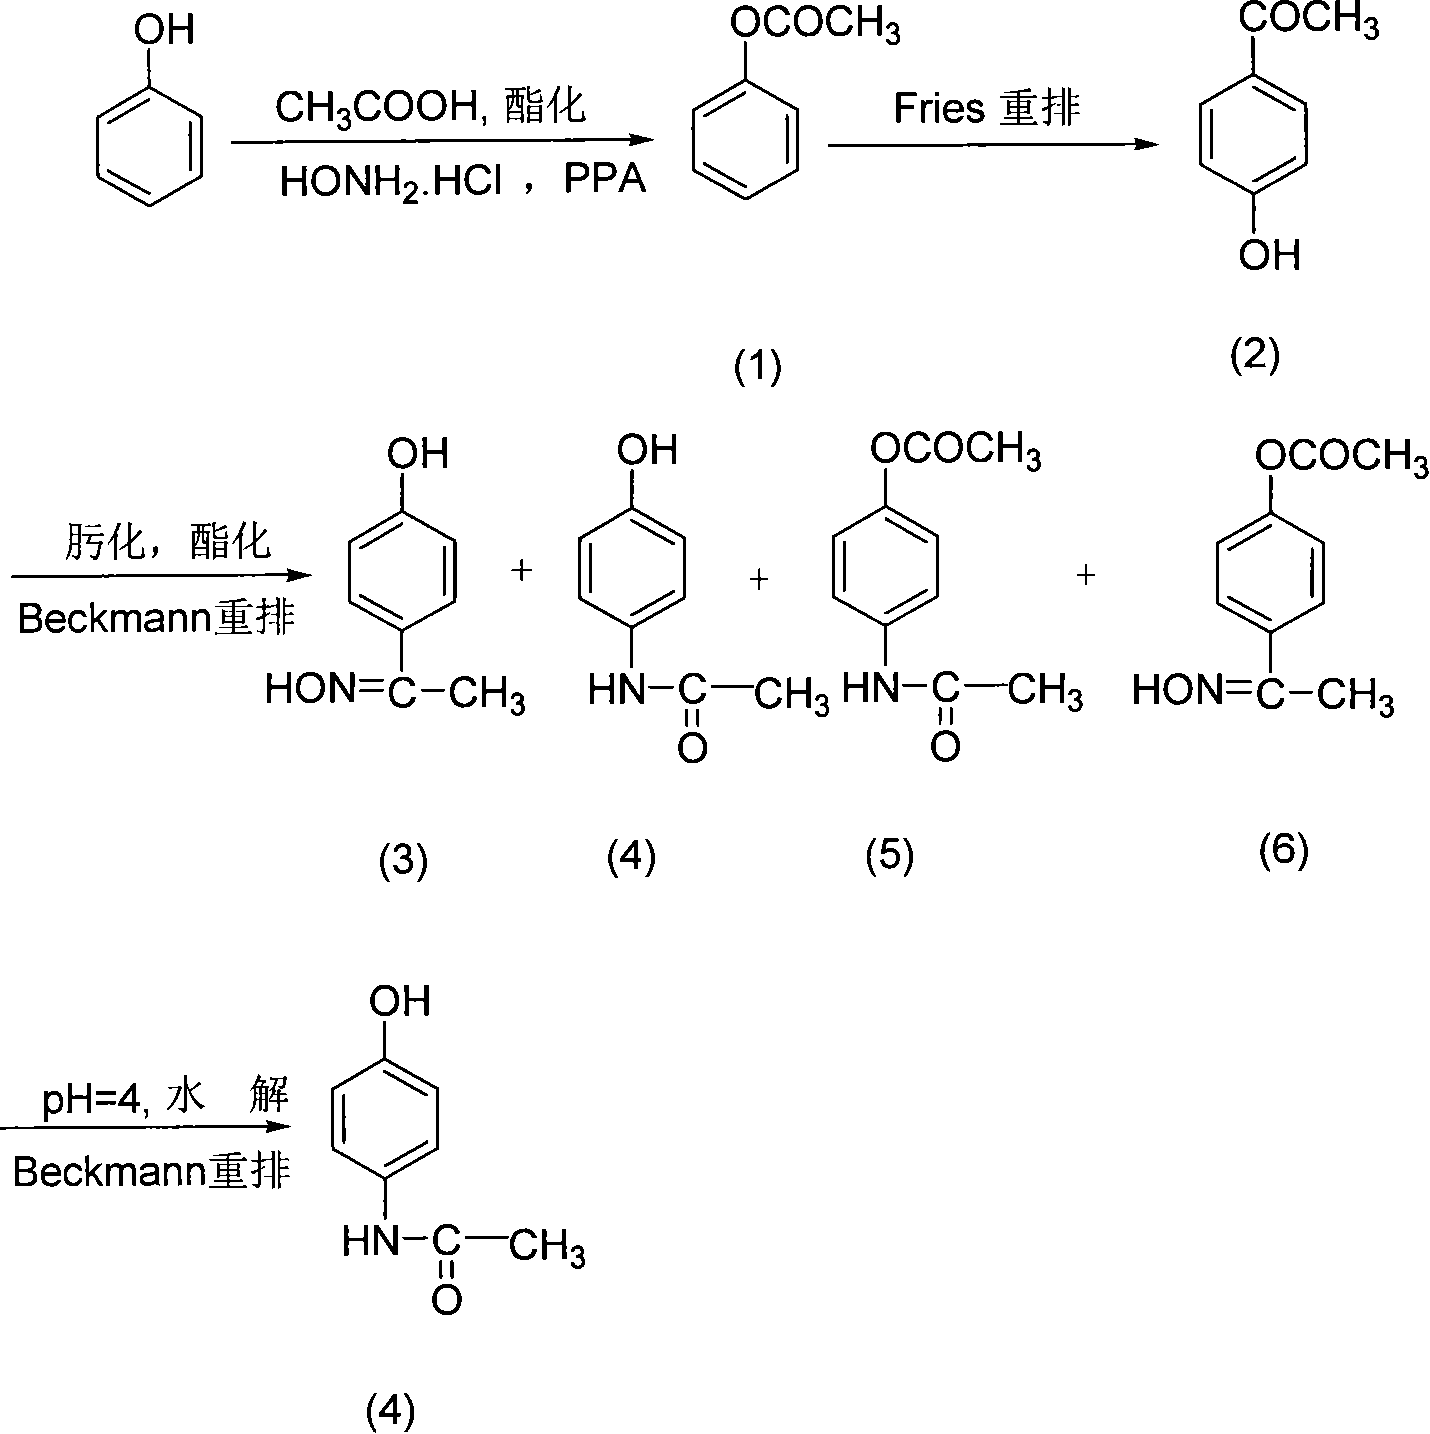 Preparation process of p-acetaminophenol